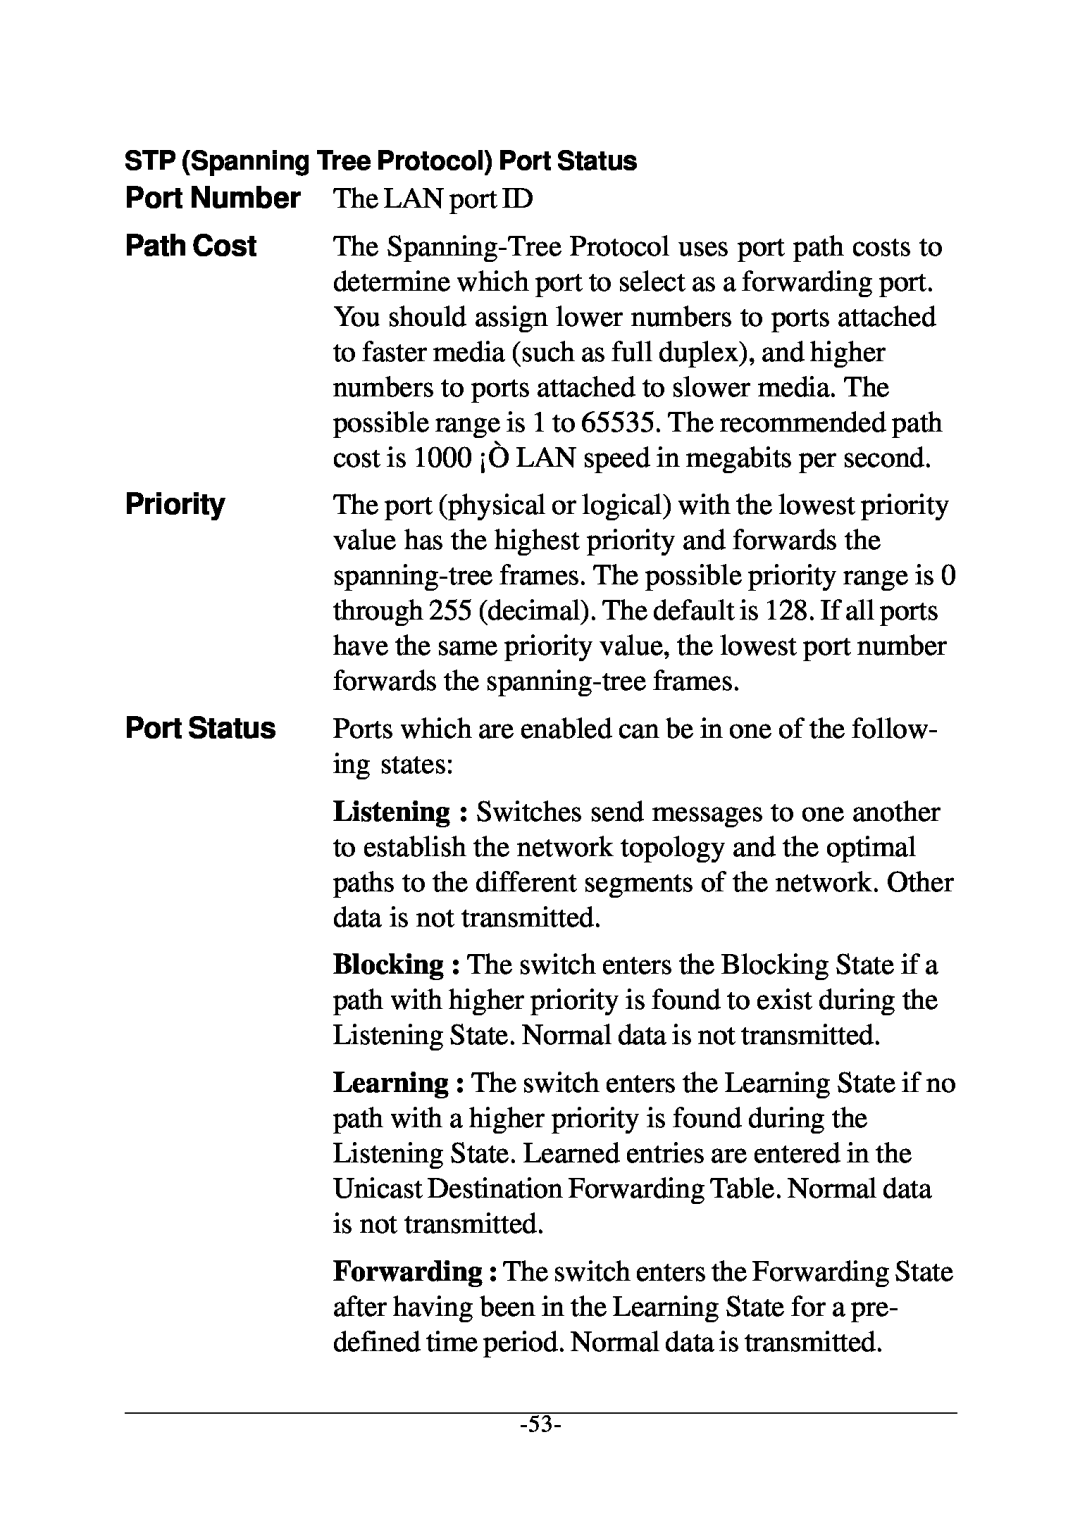 Xerox KS-801 operation manual Port Number, Path Cost, Priority, STP Spanning Tree Protocol Port Status 